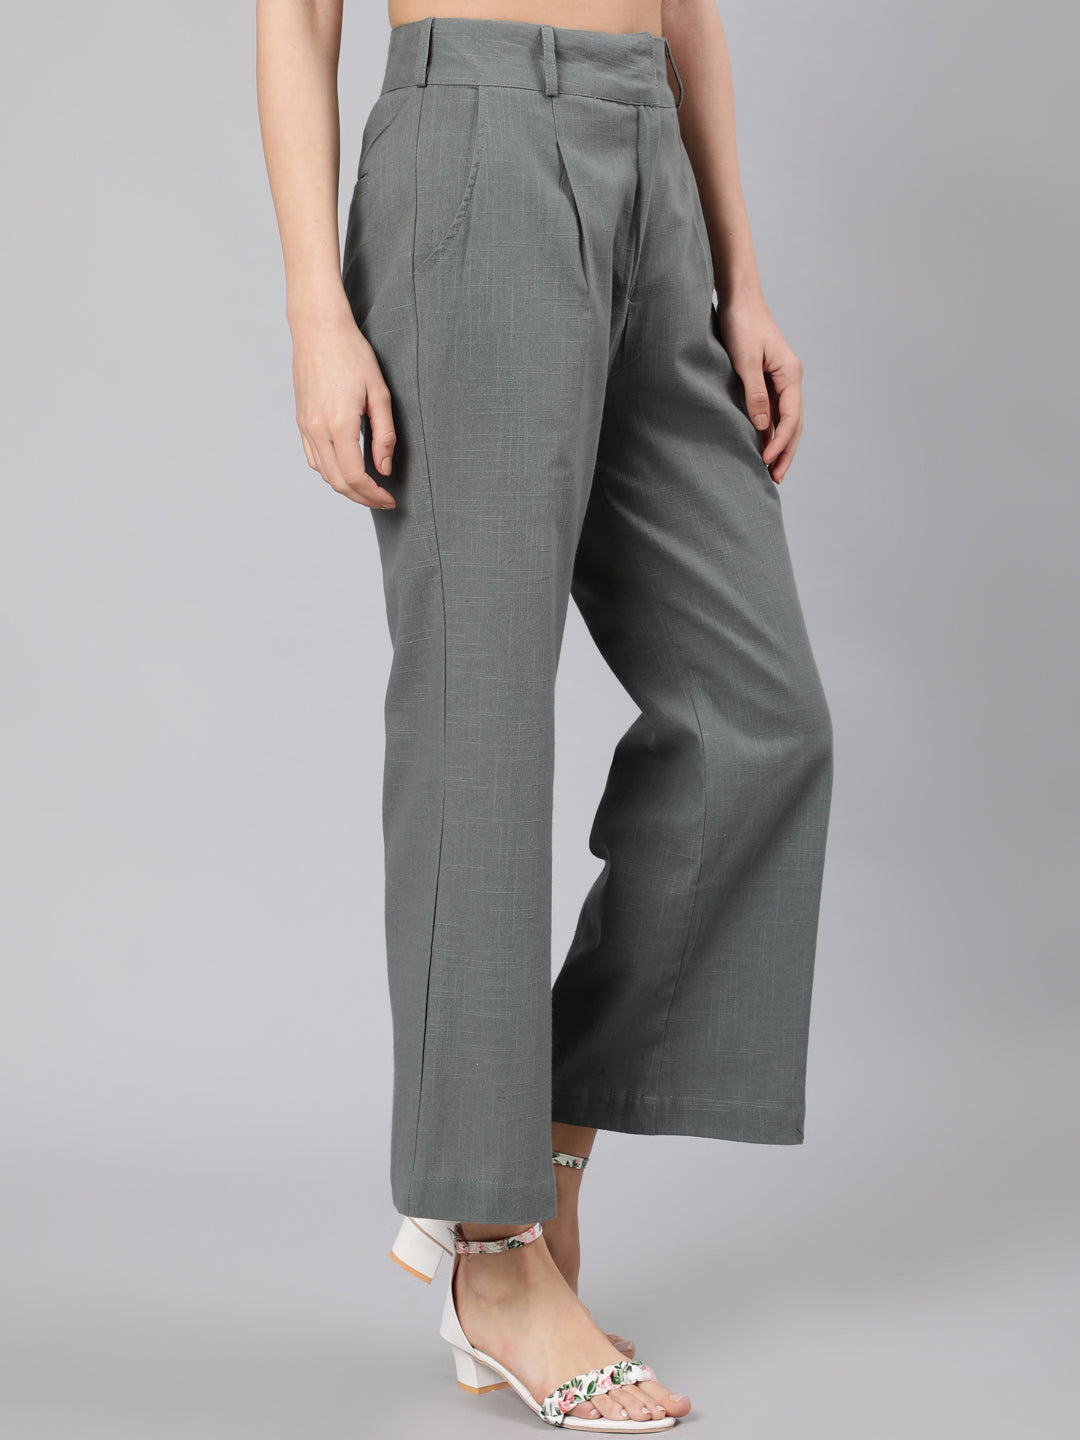 Mehrang Cotton Blend Parallel Trouser Pants Regular fit, Bell Bottom Pants  for Women - Price History